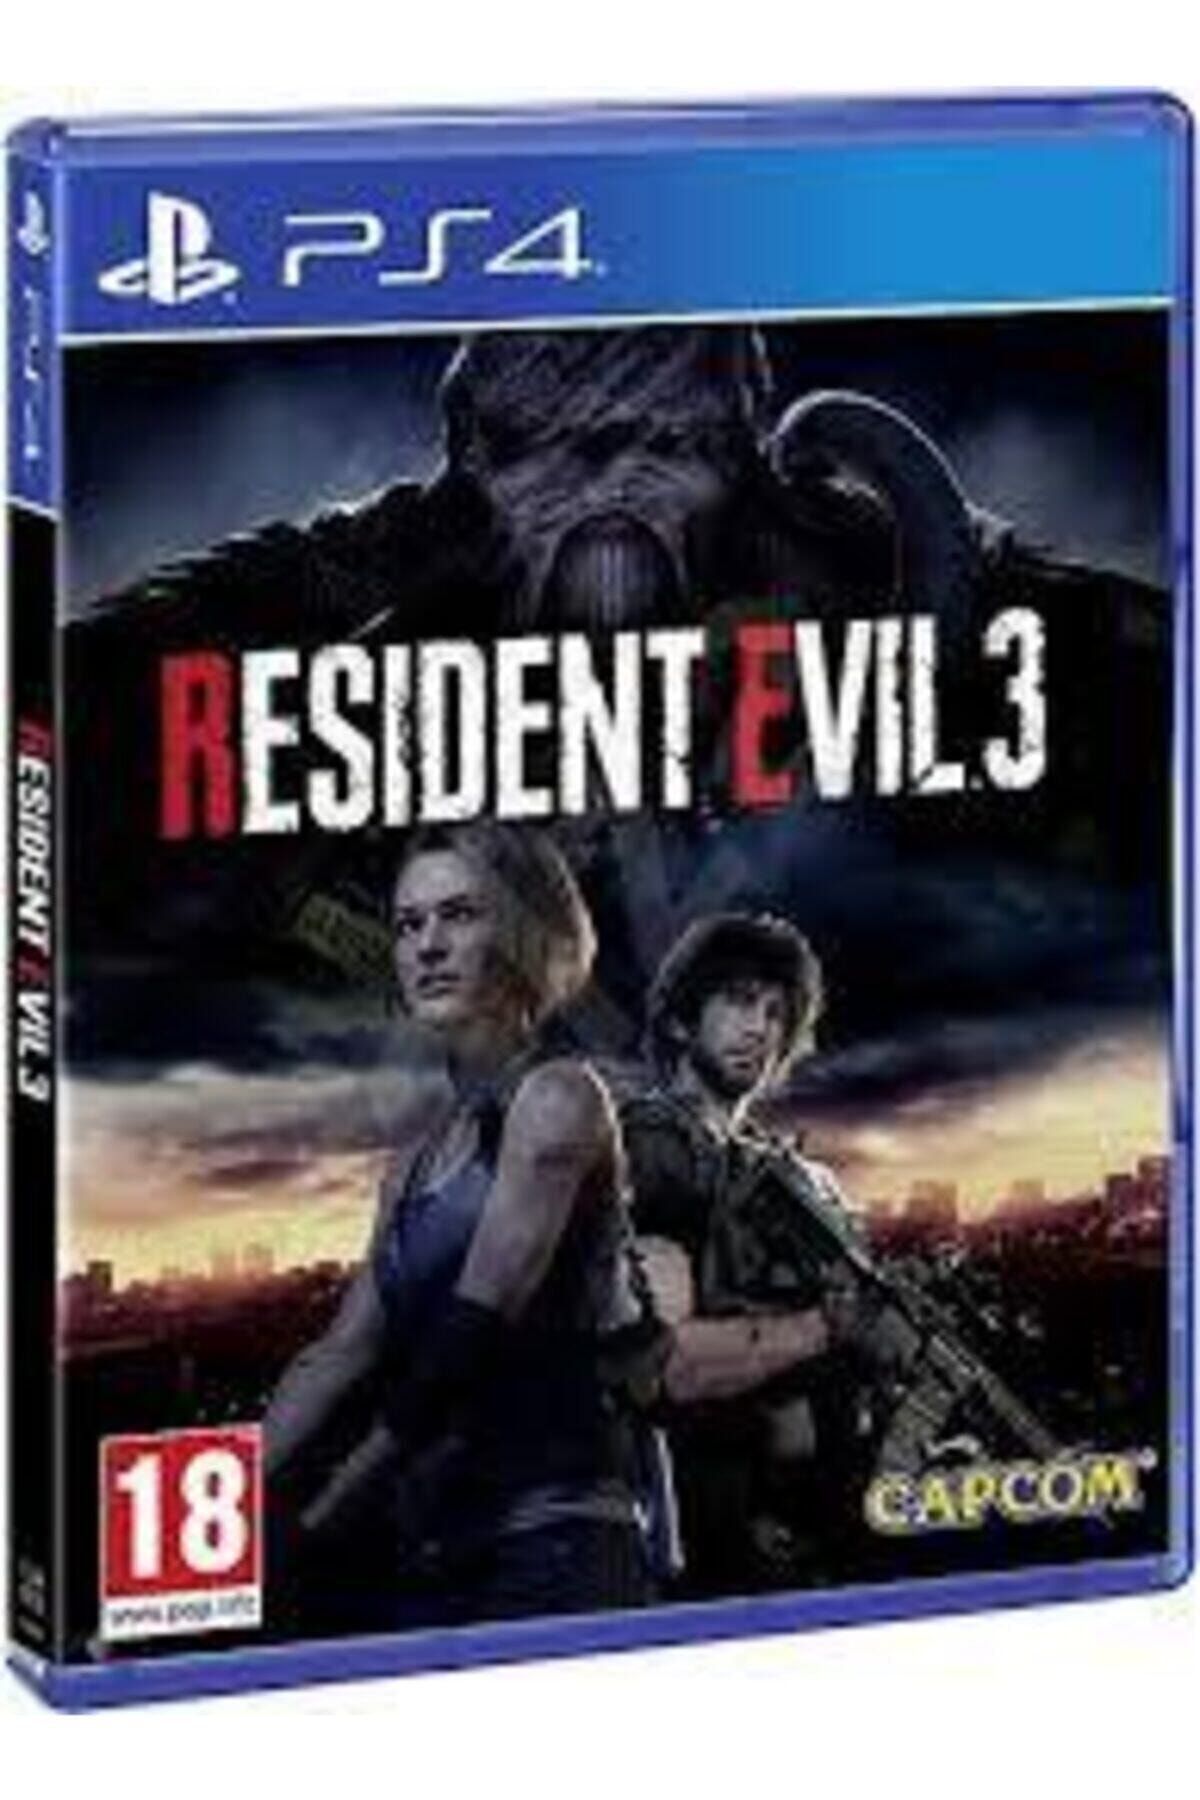 CAPCOM Resident Evil 3 Sıfır Ps4 Oyun